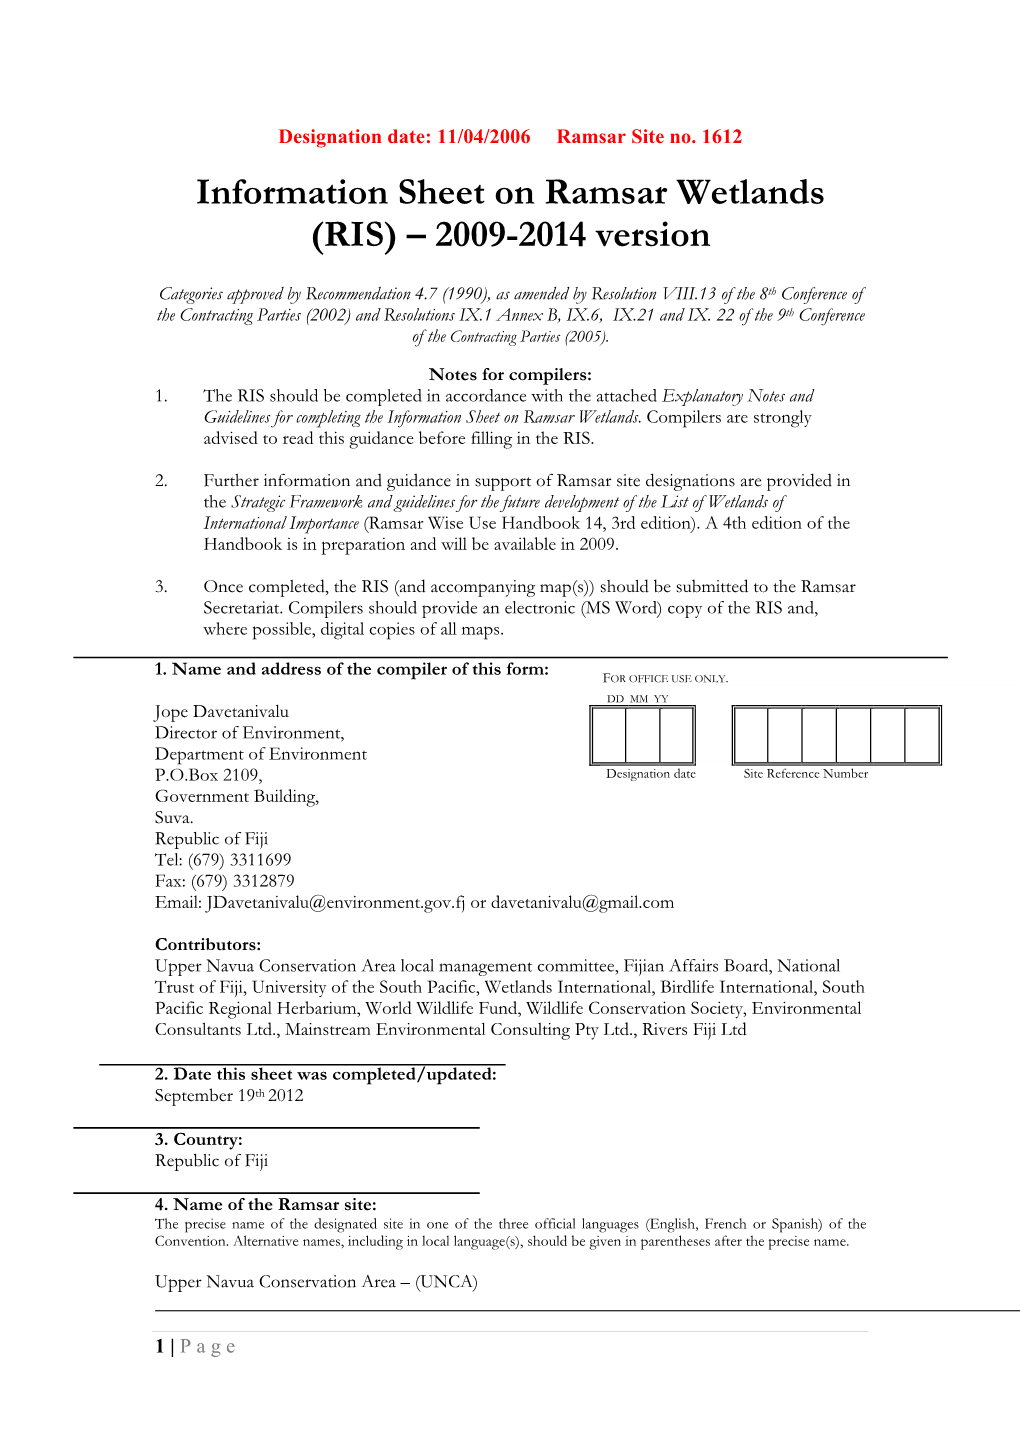 Information Sheet on Ramsar Wetlands (RIS) – 2009-2014 Version